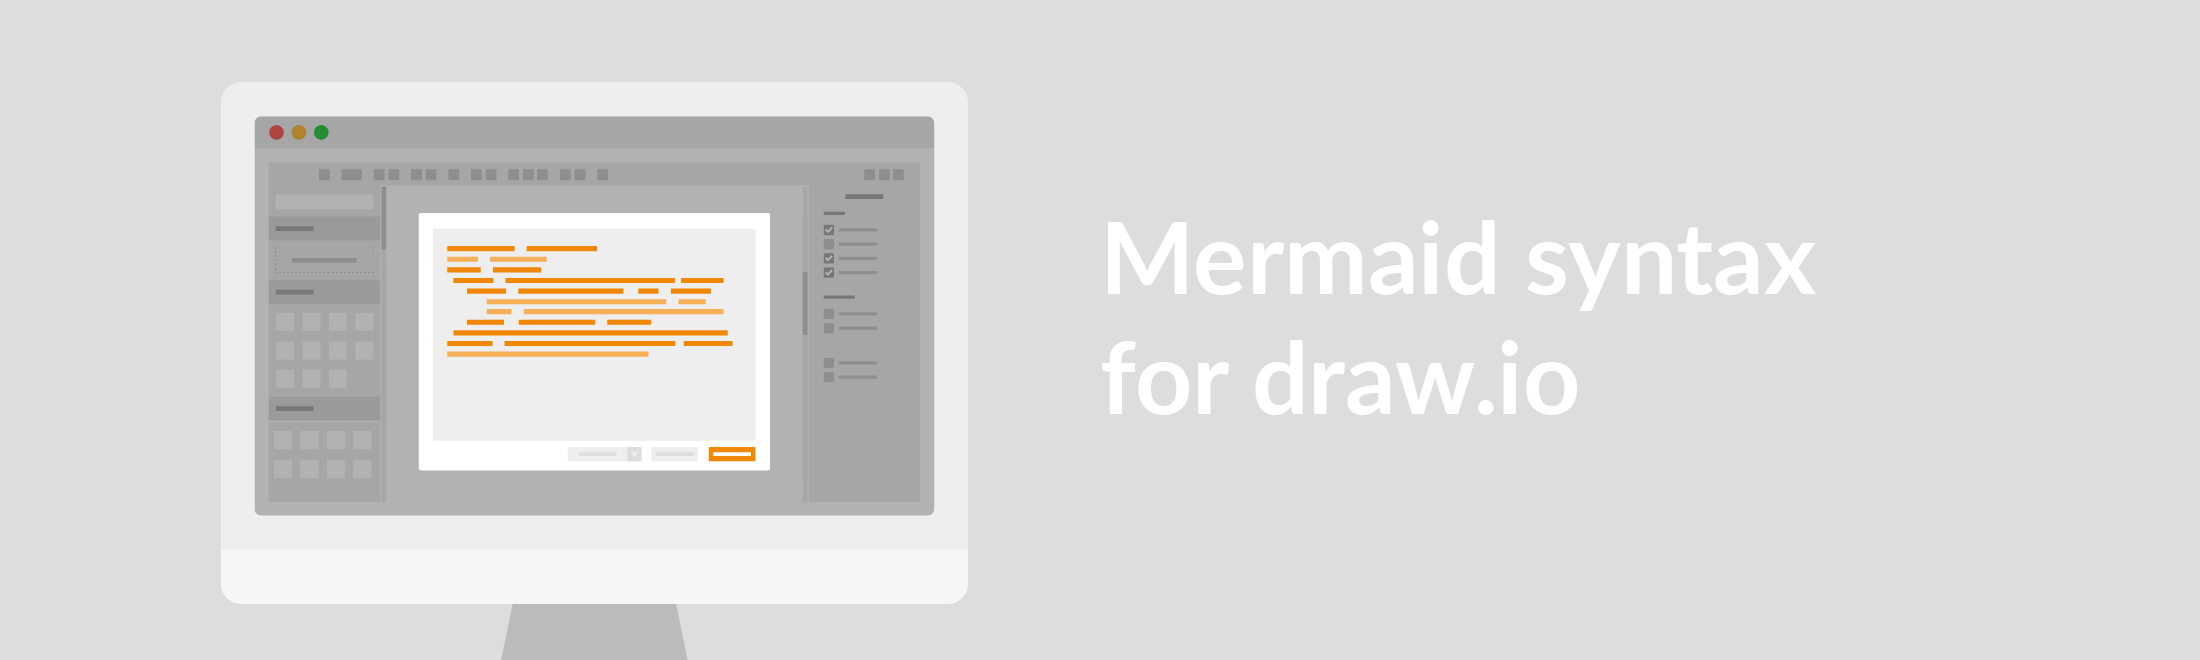 Mermaid syntax for draw.io